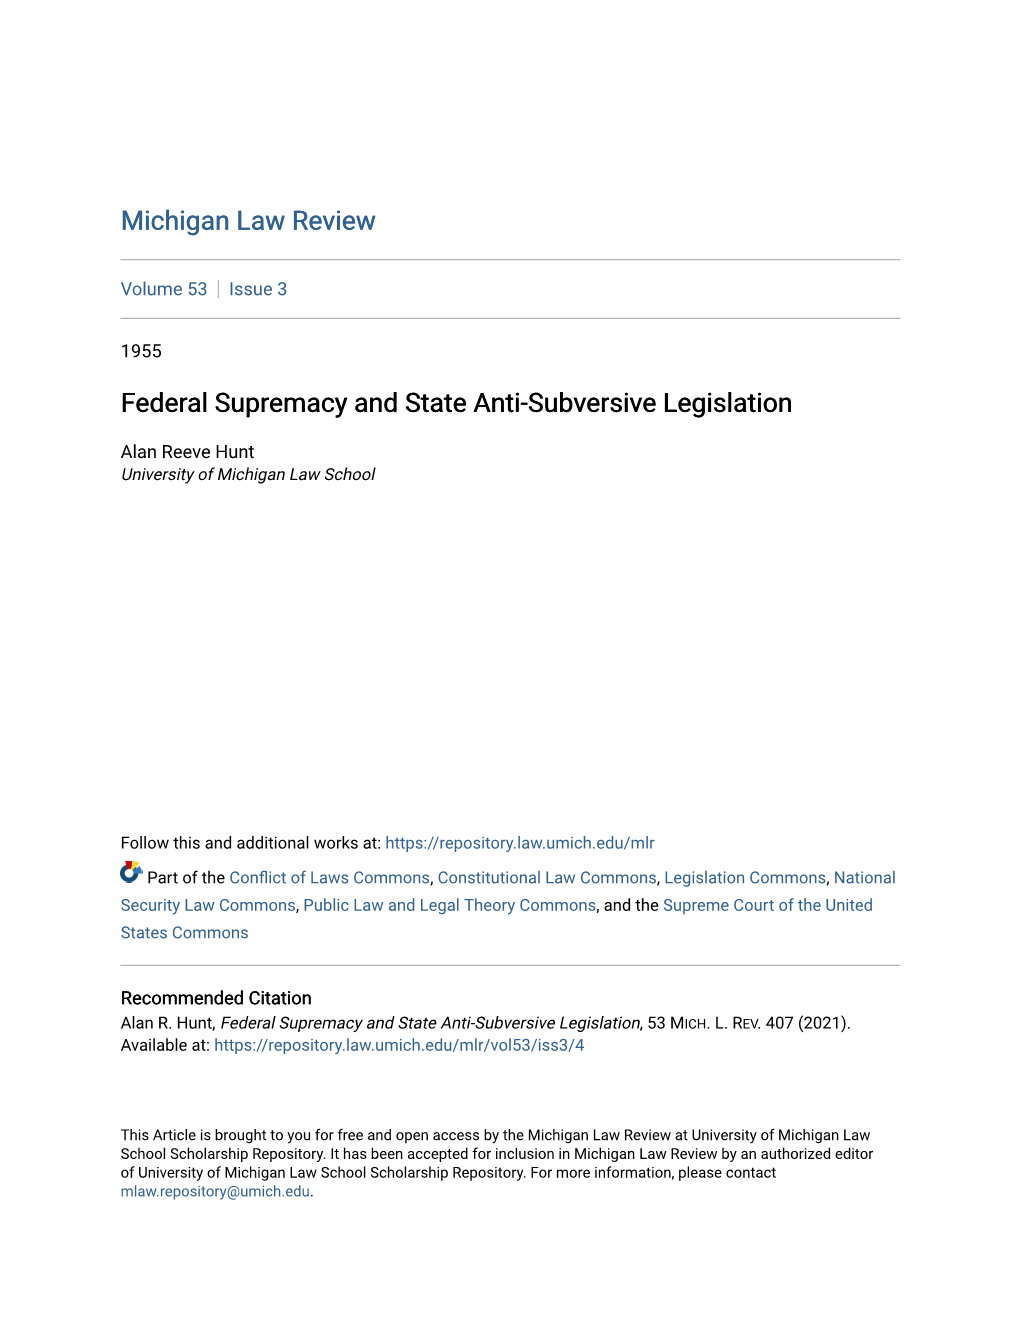 Federal Supremacy and State Anti-Subversive Legislation